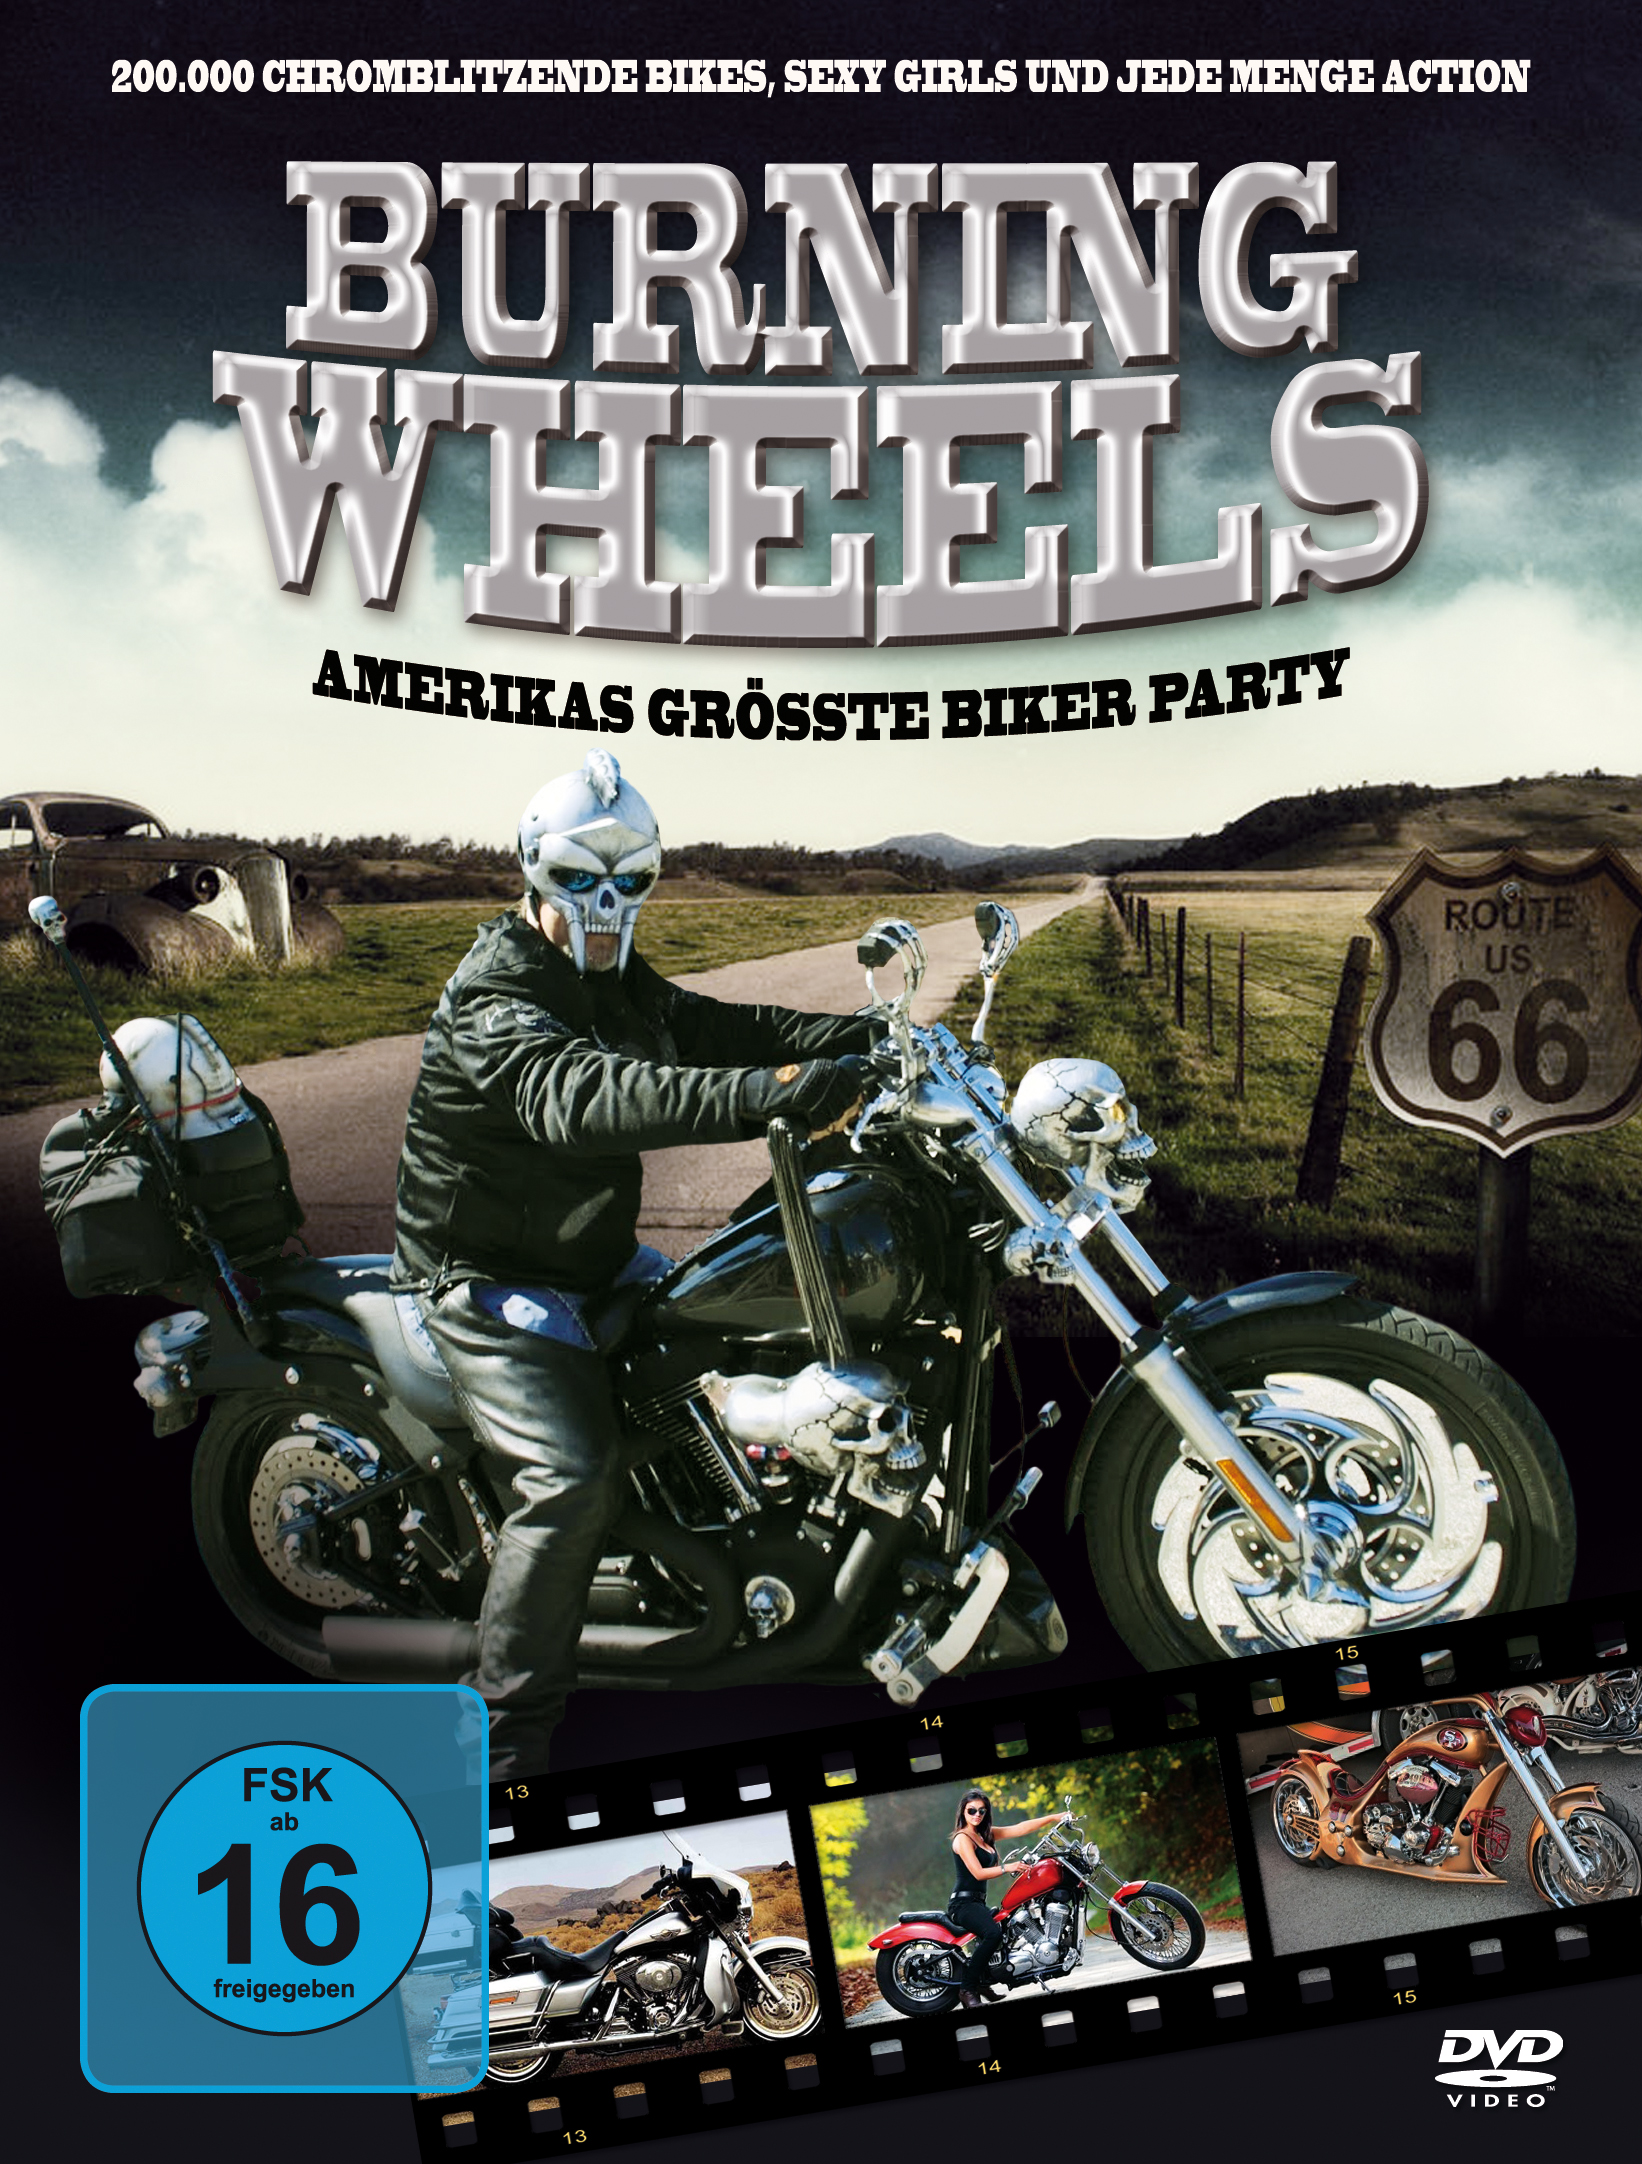 größte - Burning Wheels Biker Party DVD Amerikas